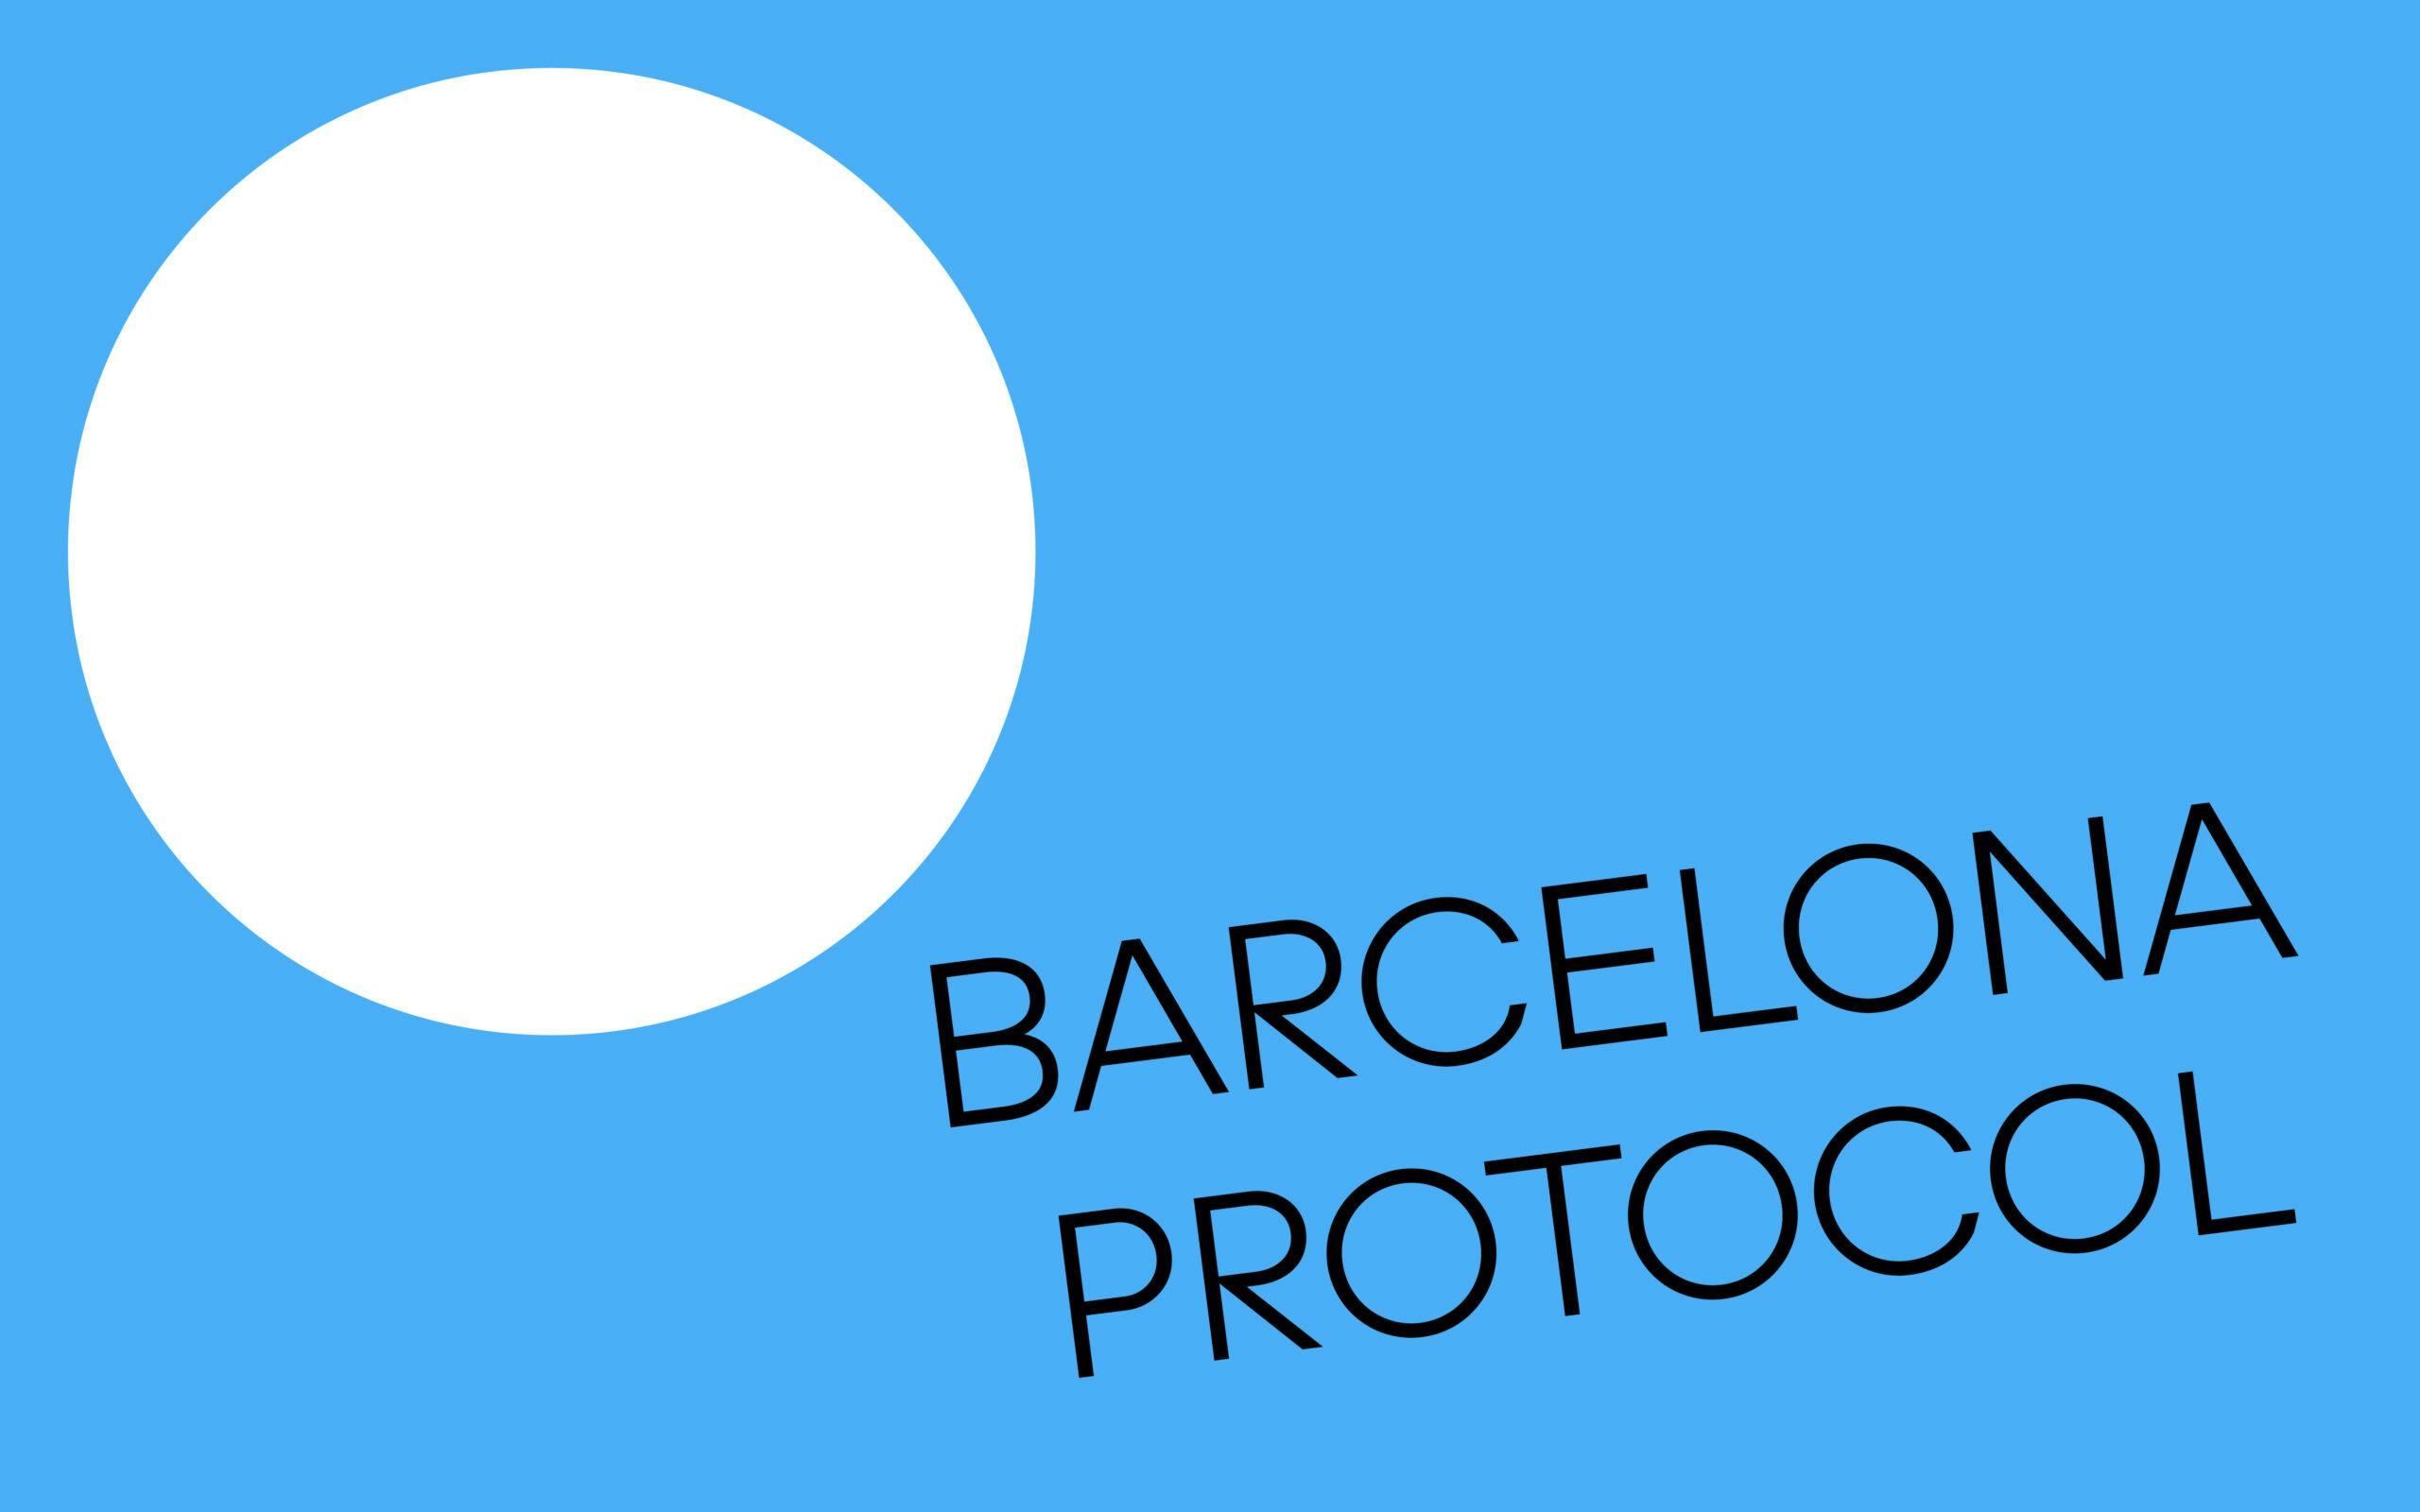 Barcelona Protocol: European Action Call Presented in Barcelona